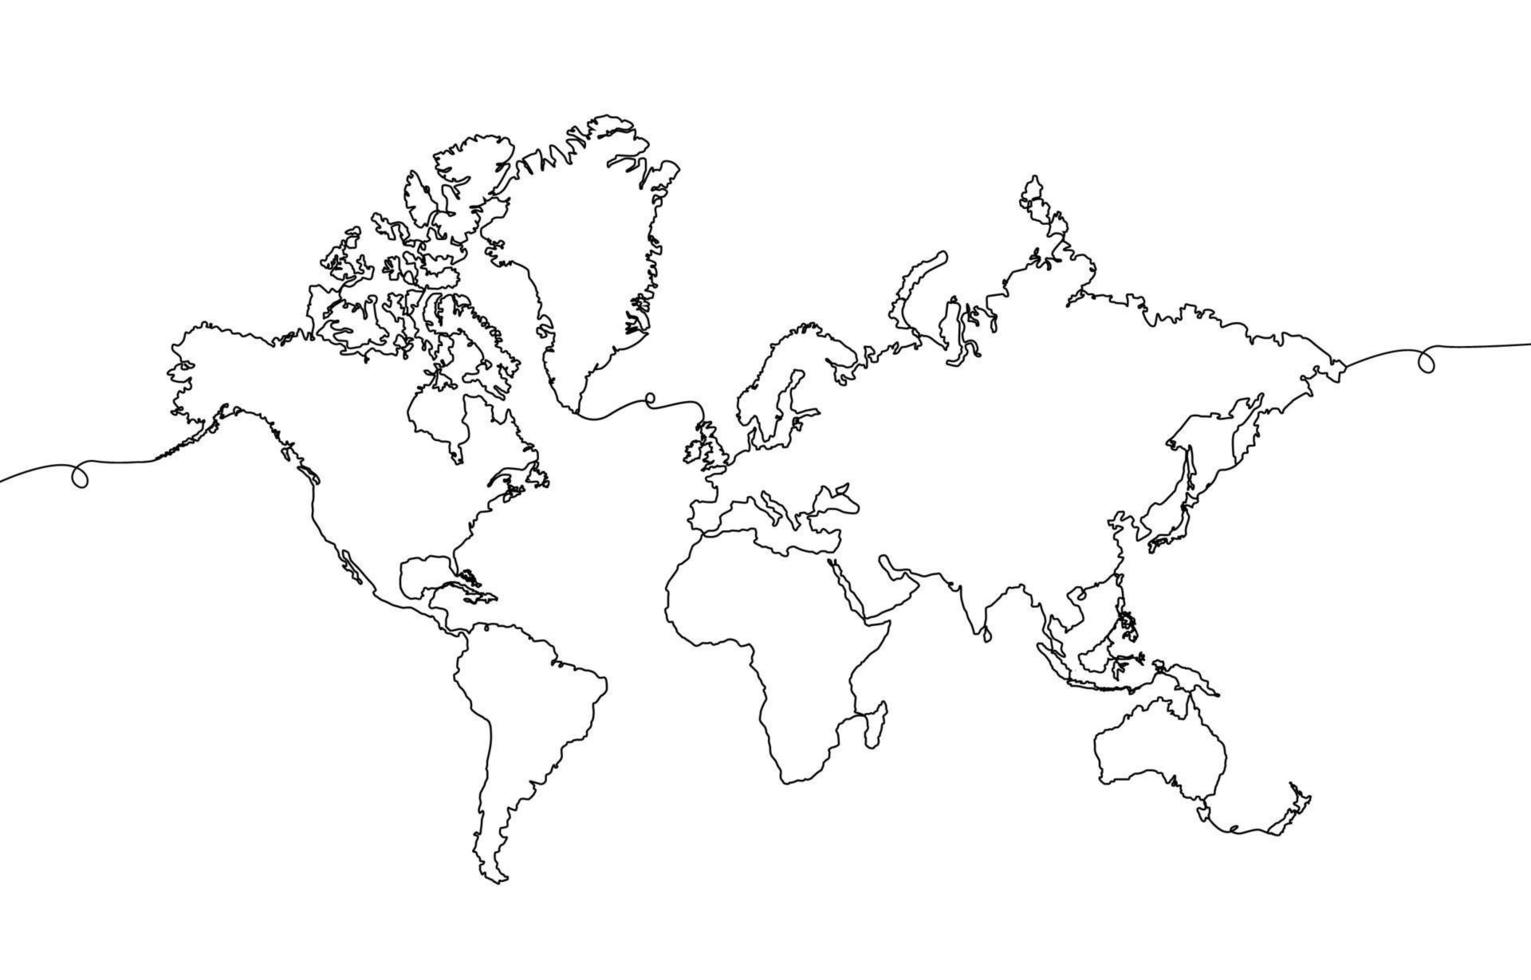 uno carrera mundo mapa vector